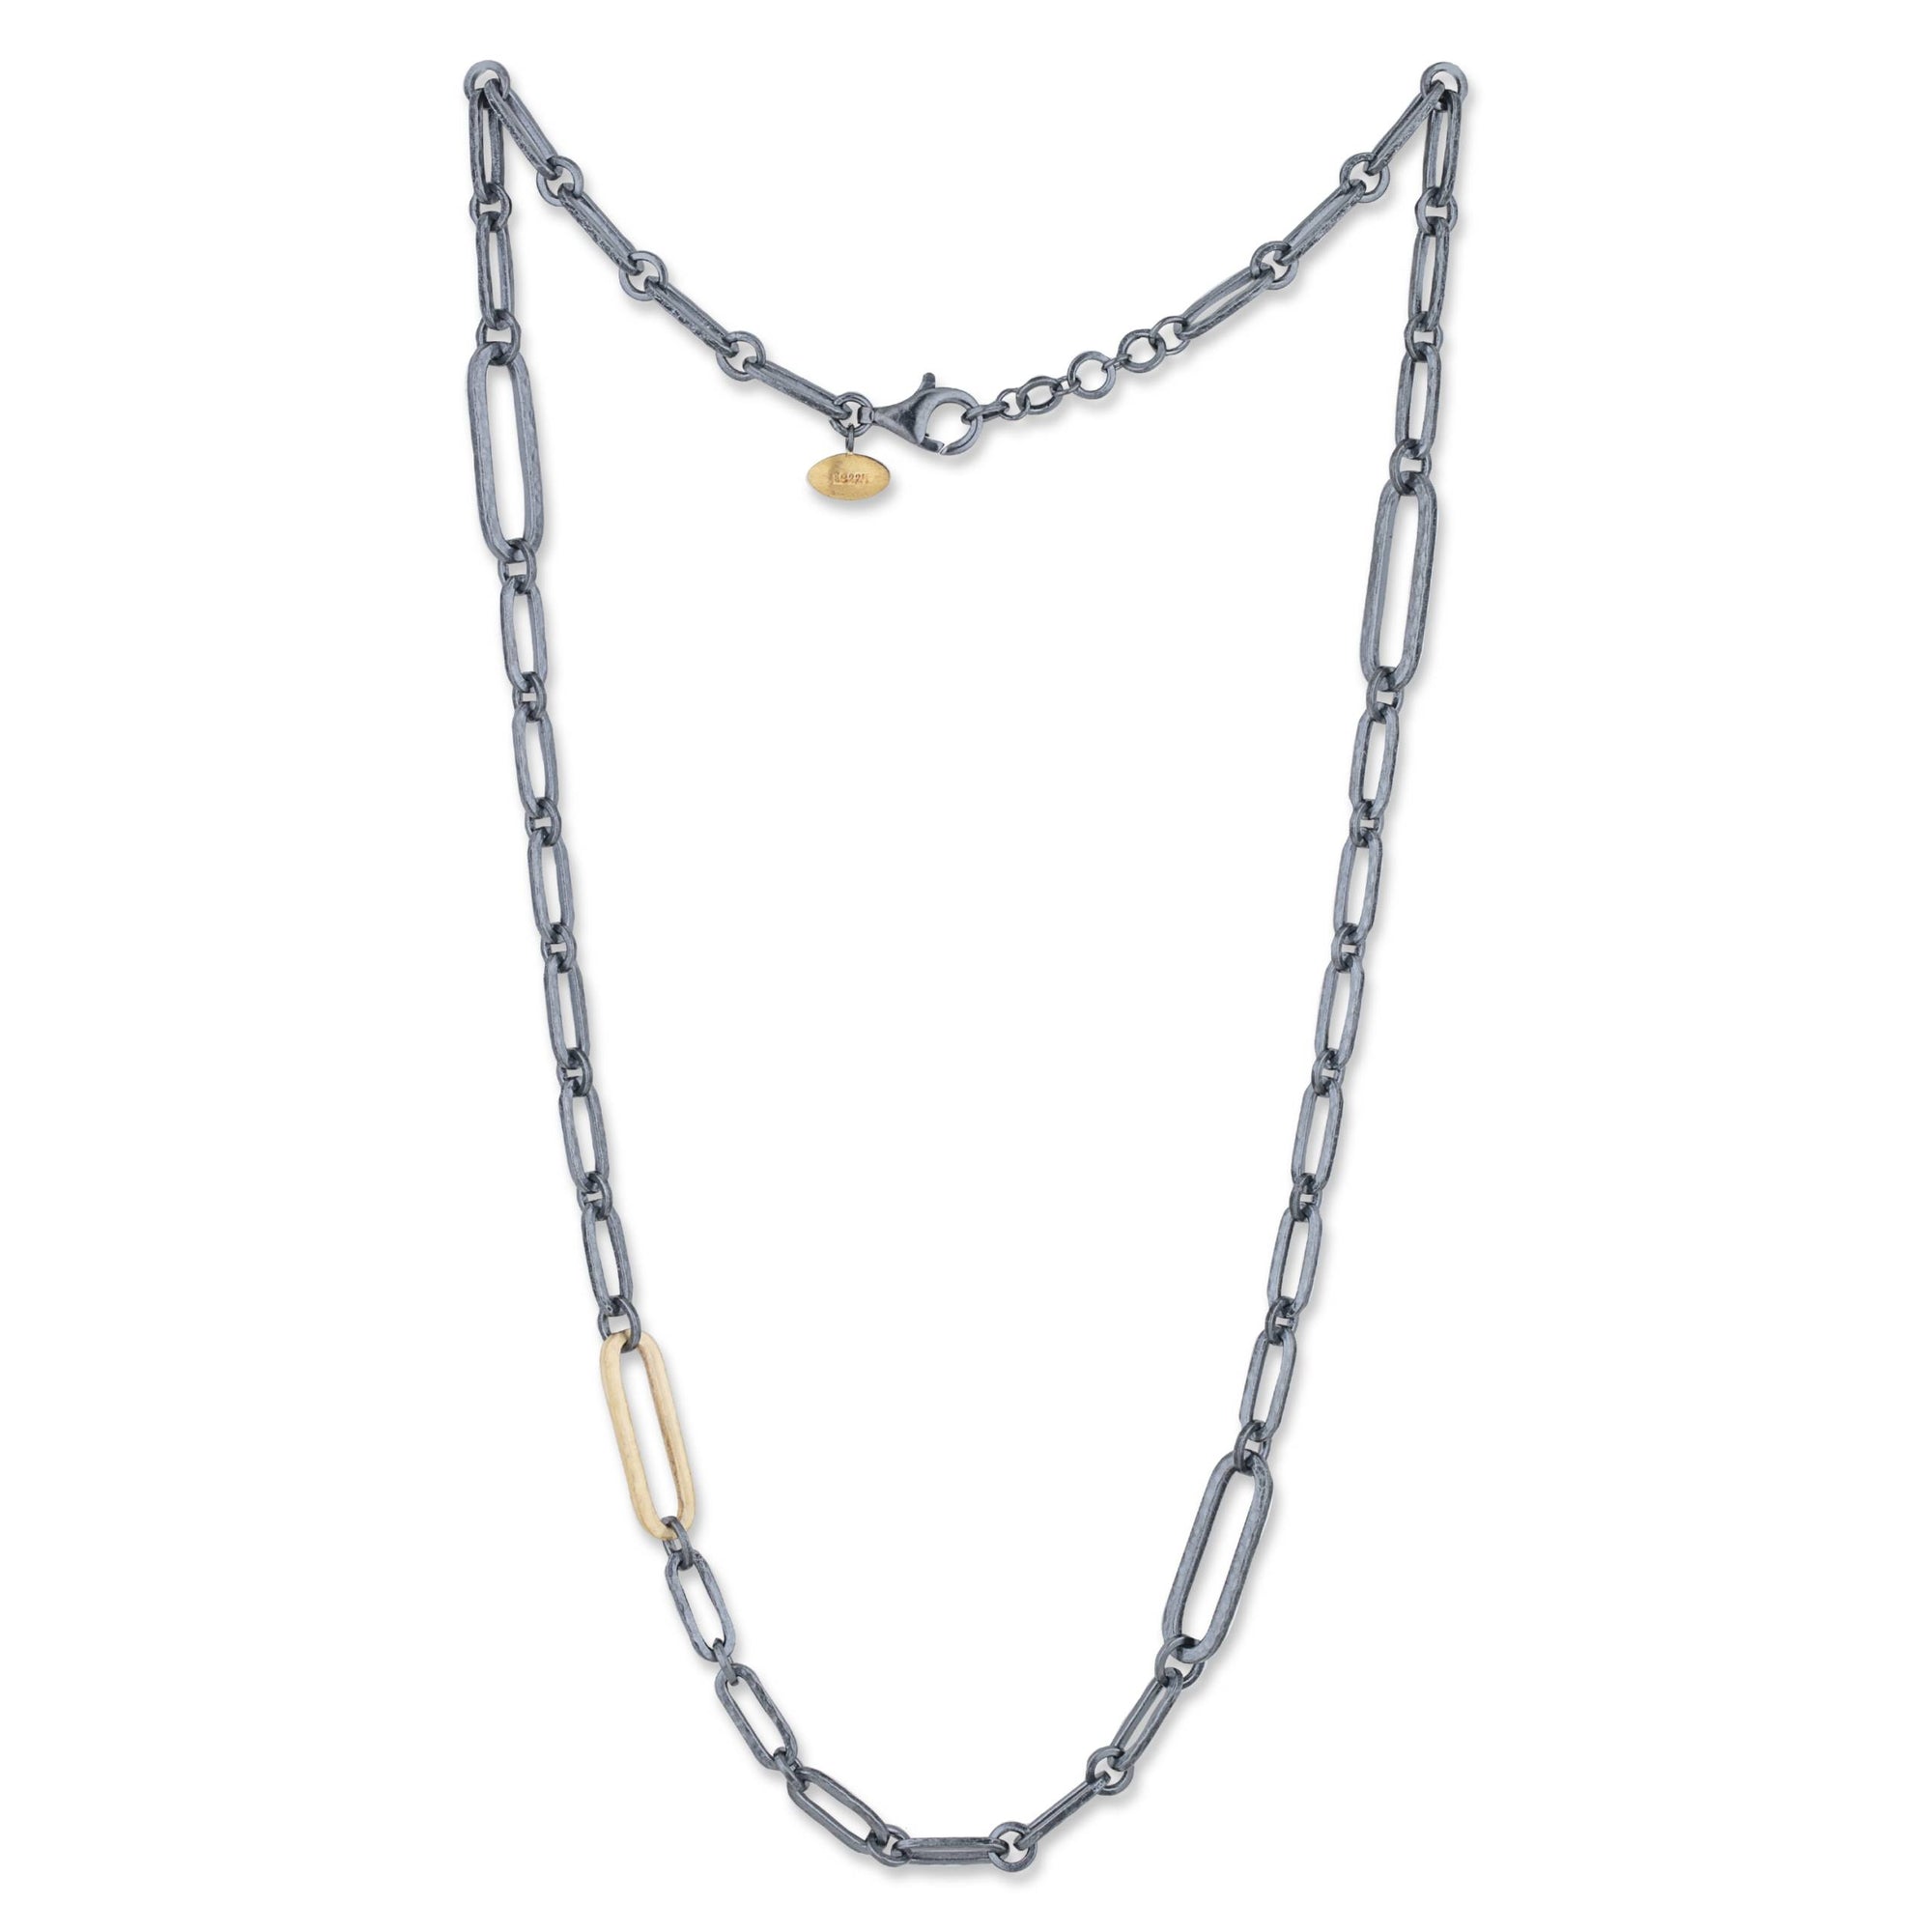 Lika Behar Oxidized Sterling Silver & 22K Gold "Chill Link" Necklace